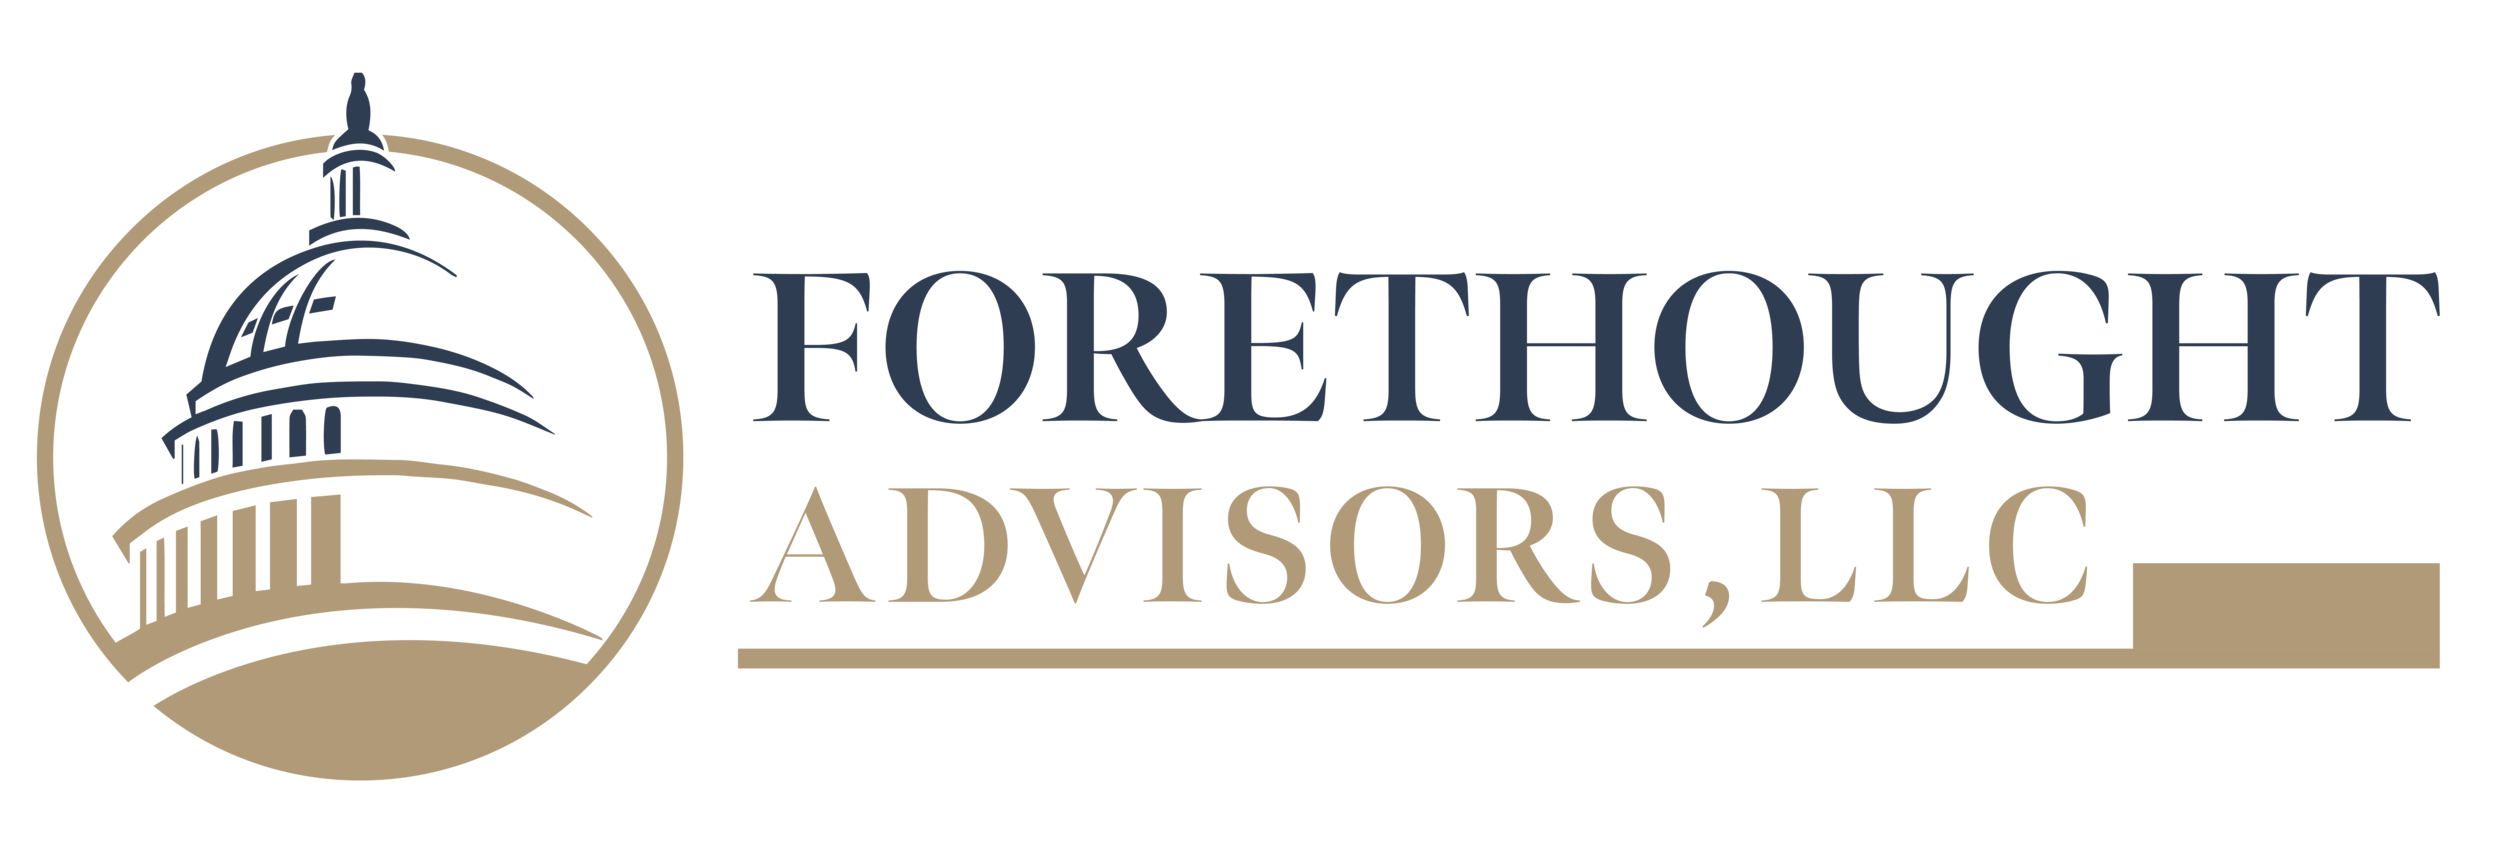 Forethought Advisors, LLC